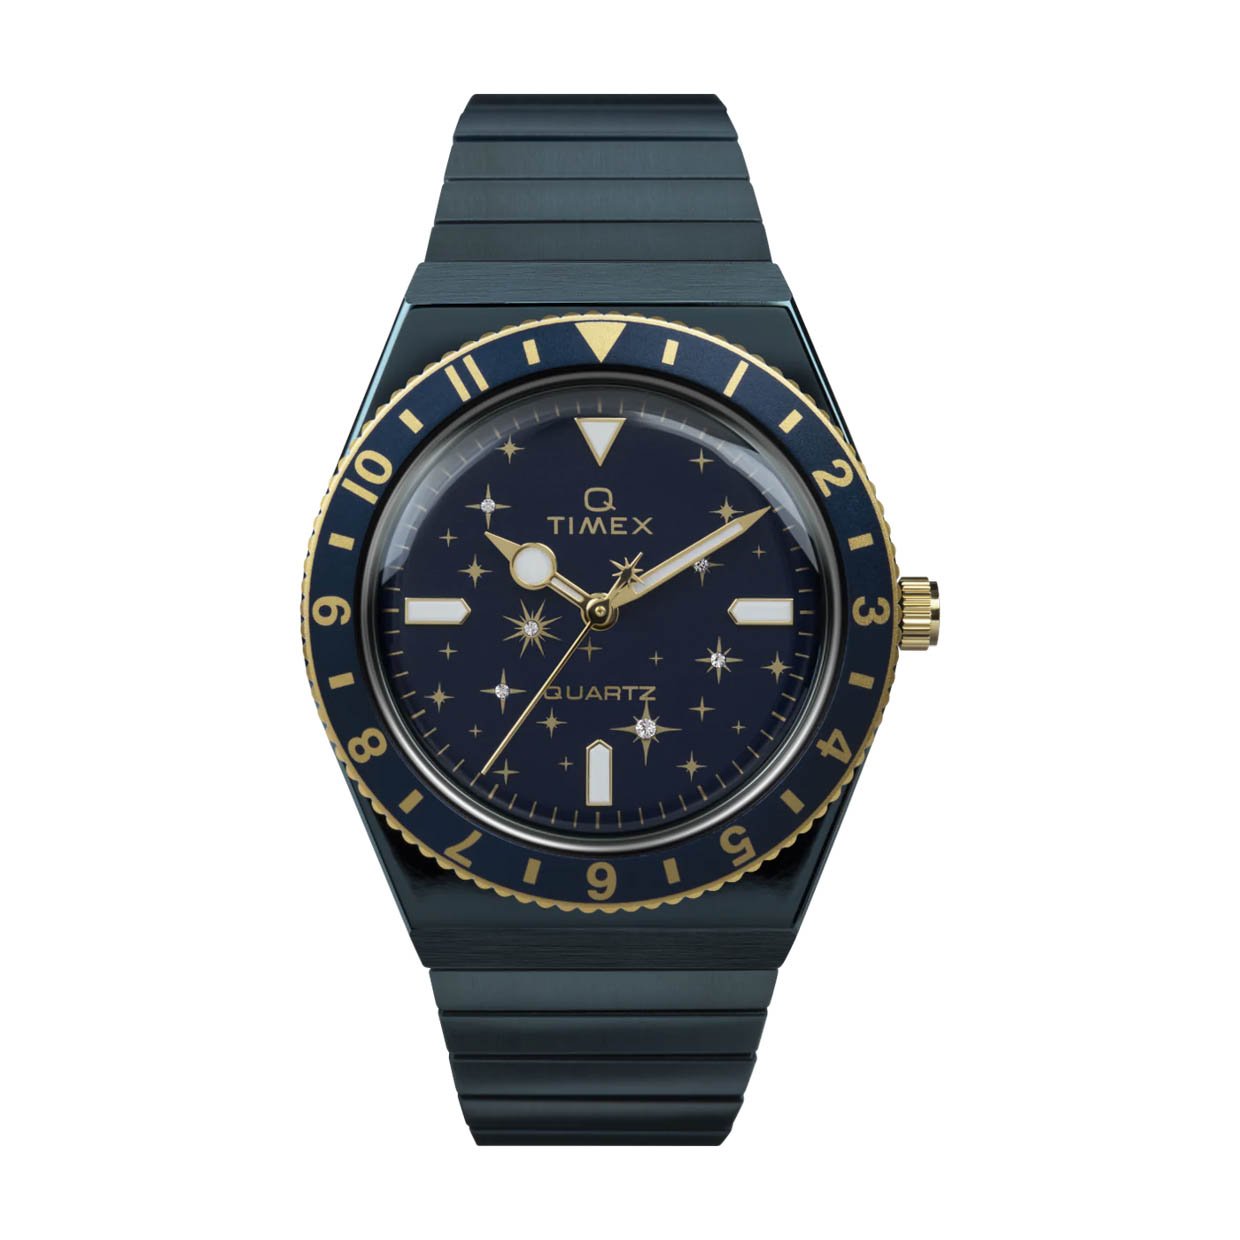 Q Timex Celestial Watch